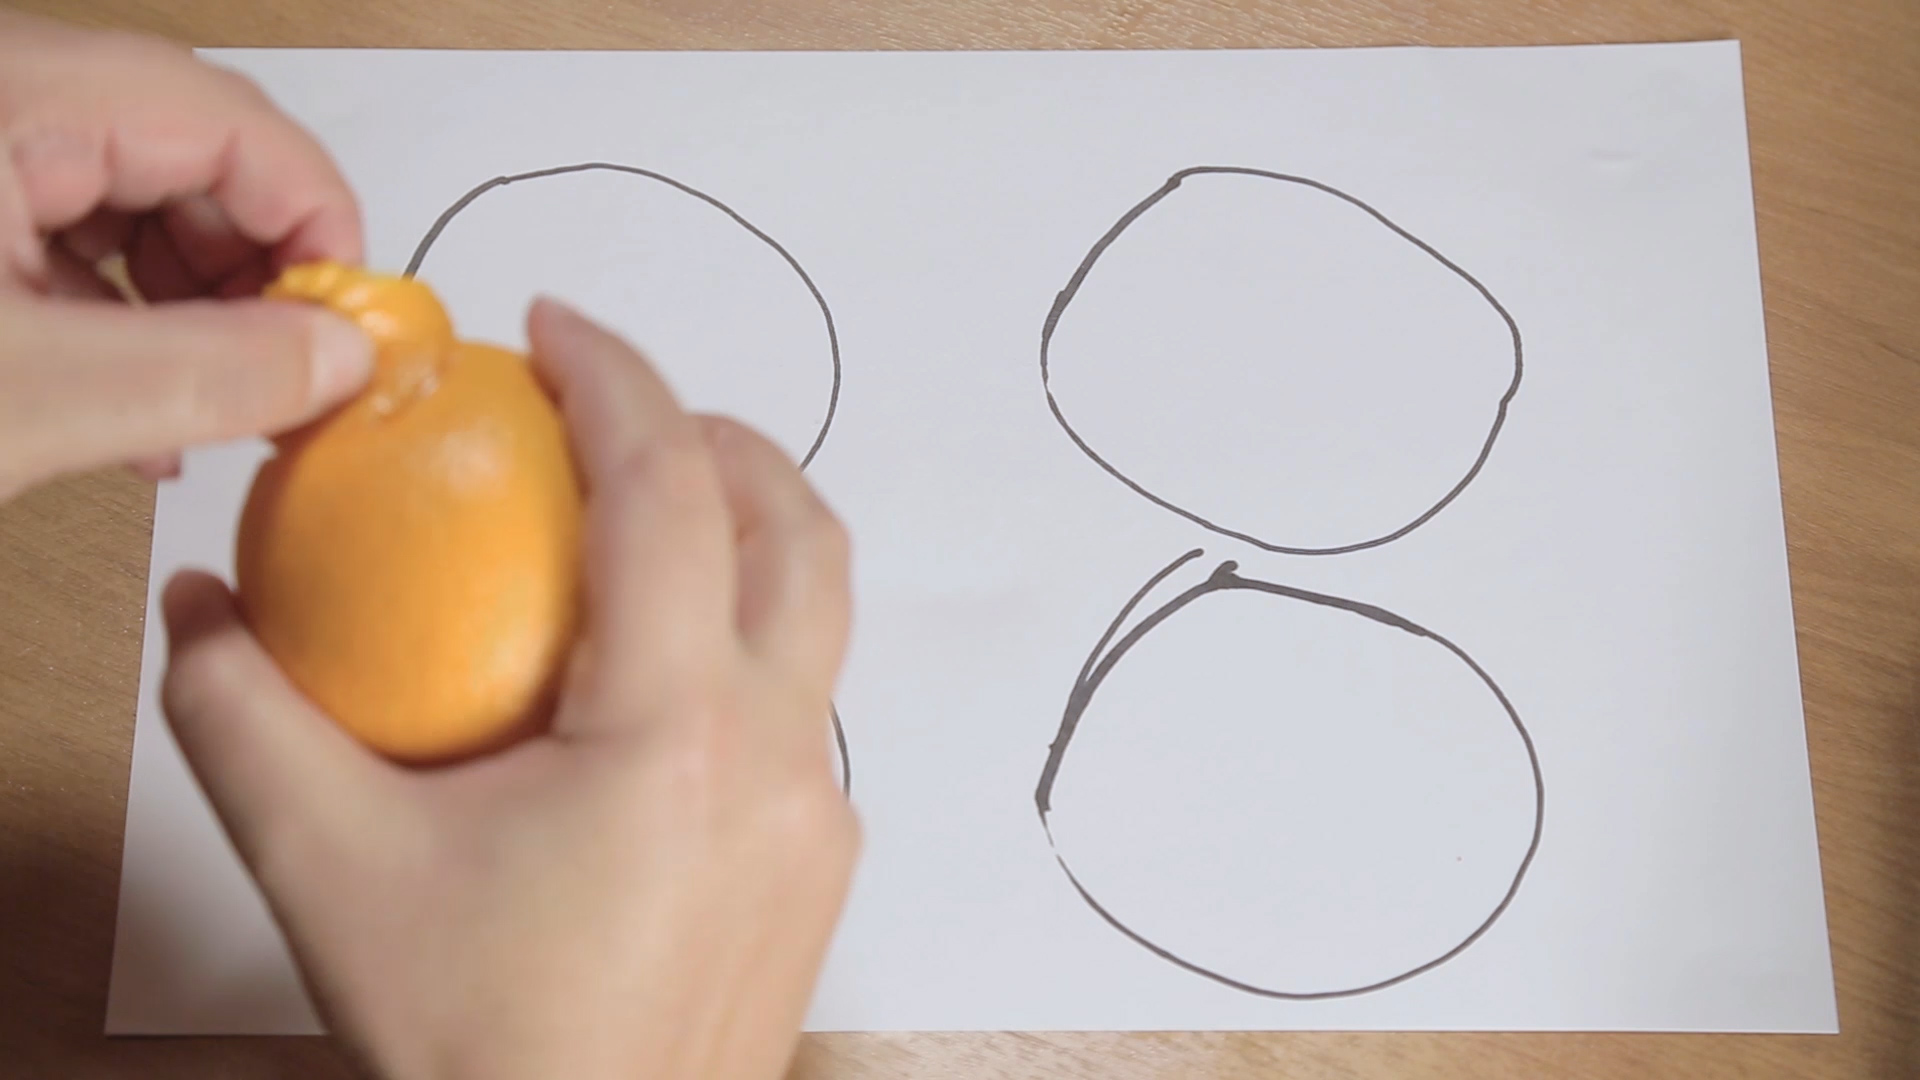 Гуманитарий объяснил математику на апельсинах